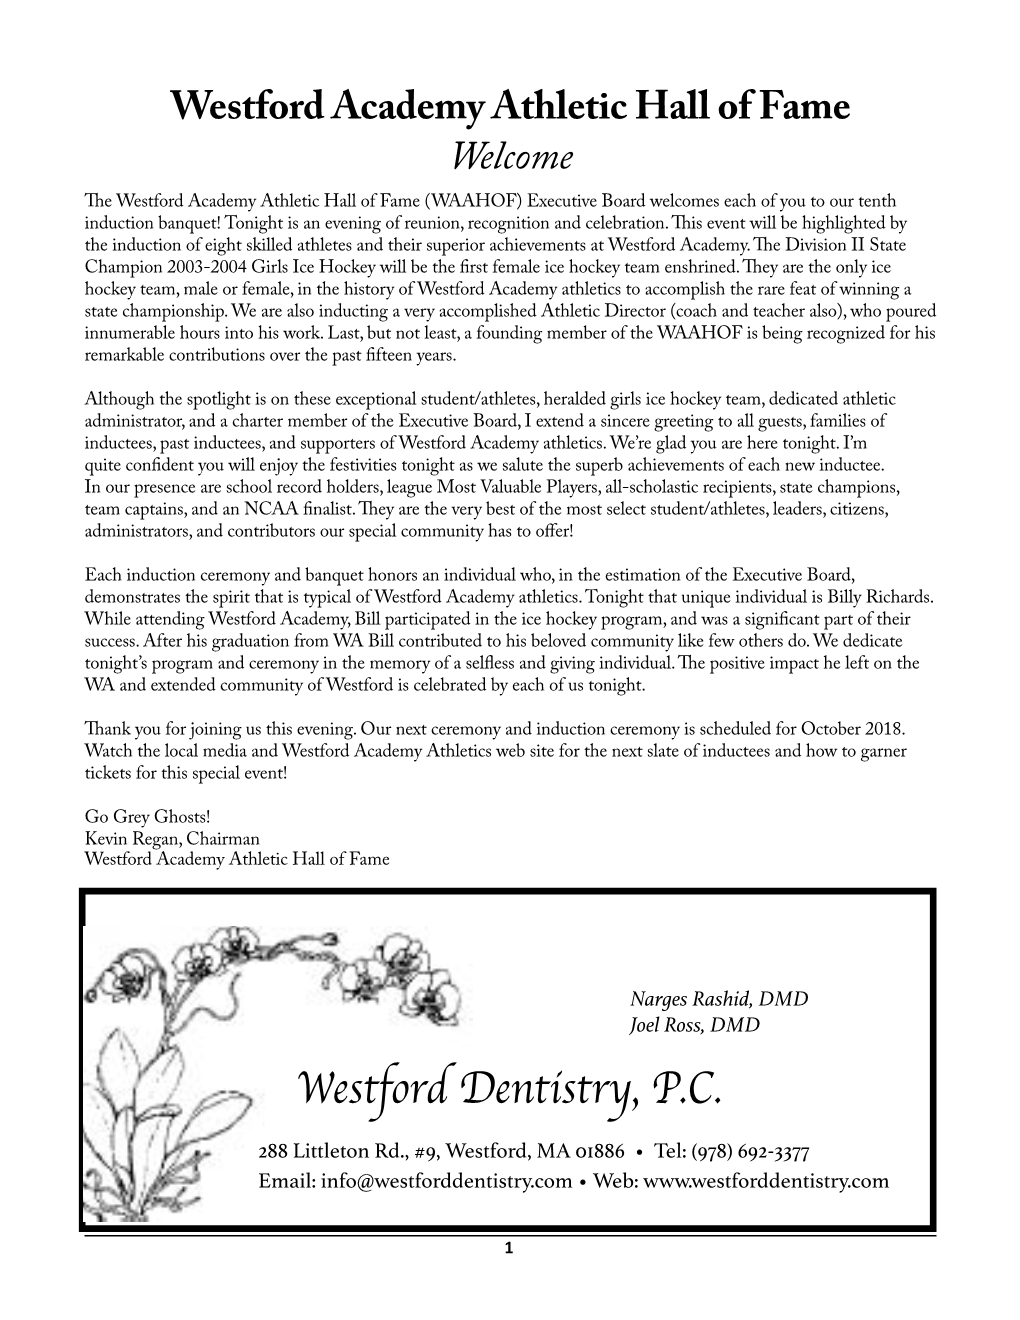 Westford Dentistry, P.C. 288 Littleton Rd., #9, Westford, MA 01886 • Tel: (978) 692-3377 Email: Info@Westforddentistry.Com • Web